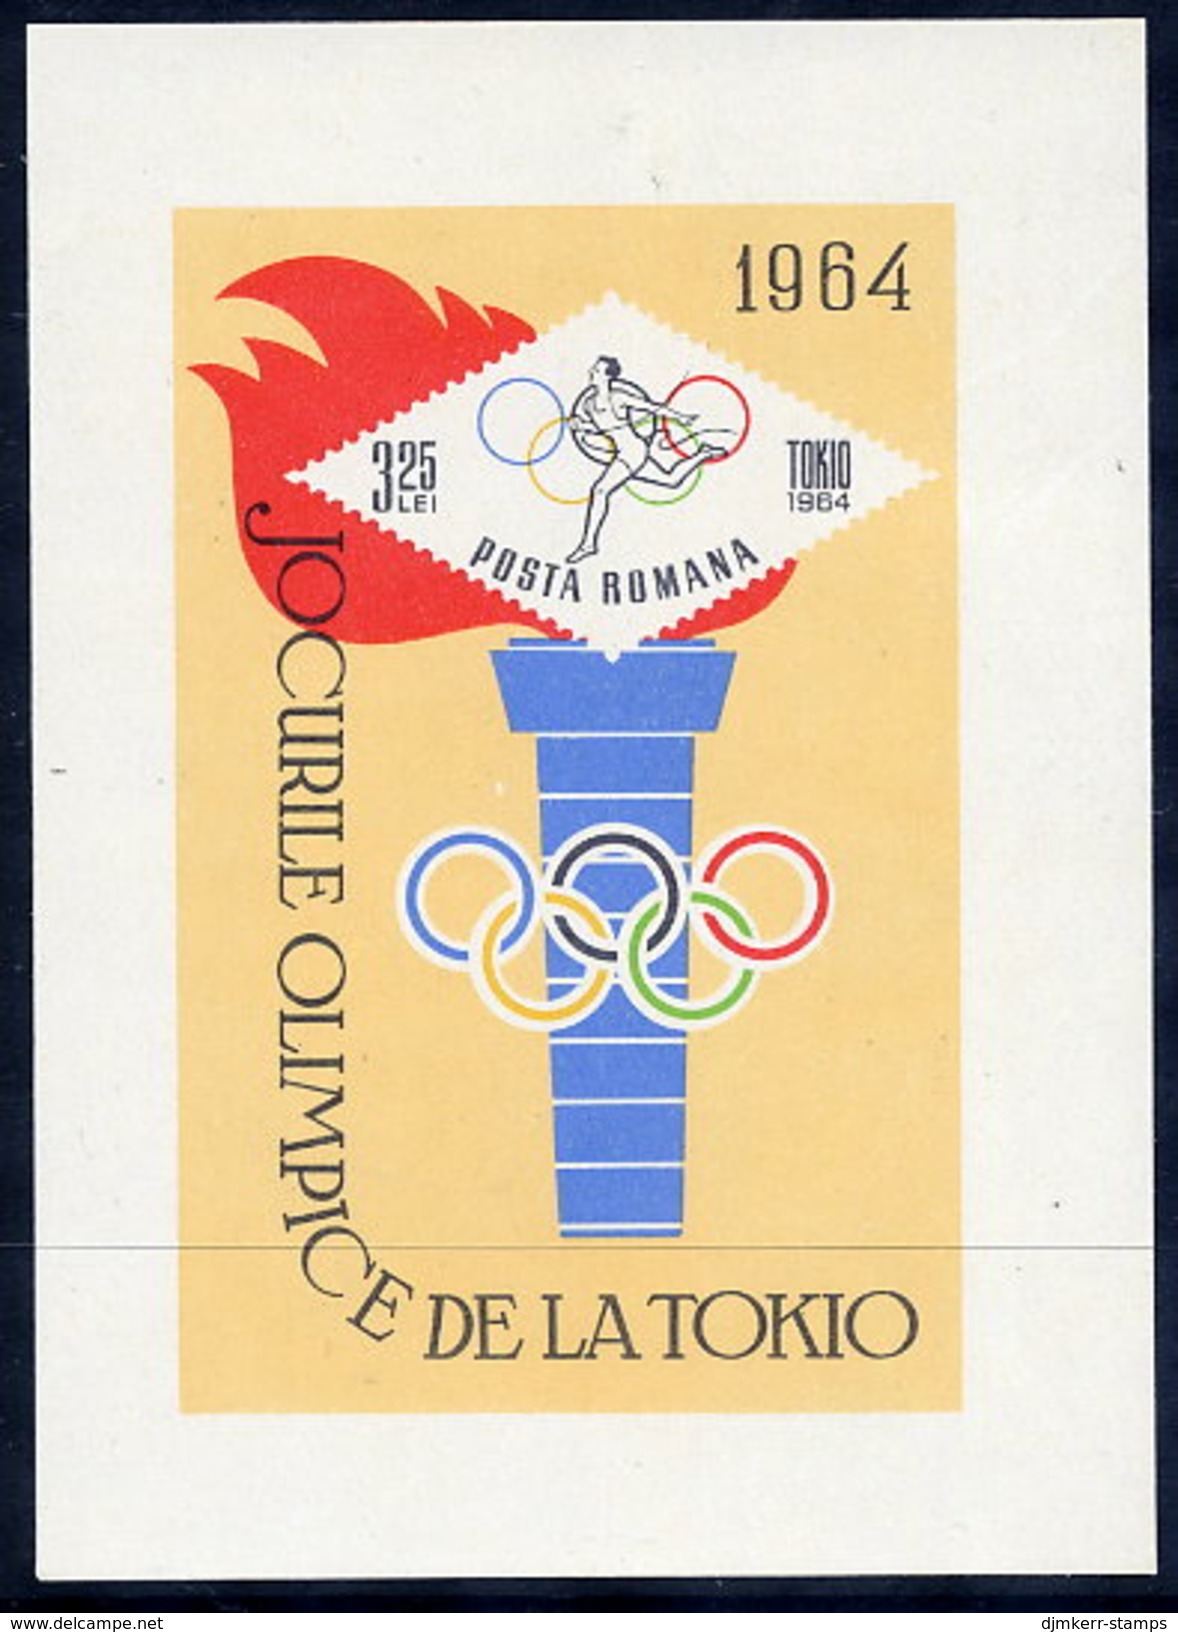 ROMANIA 1964 Olympic Games Block, MNH / **.  Michel Block 58 - Blocs-feuillets